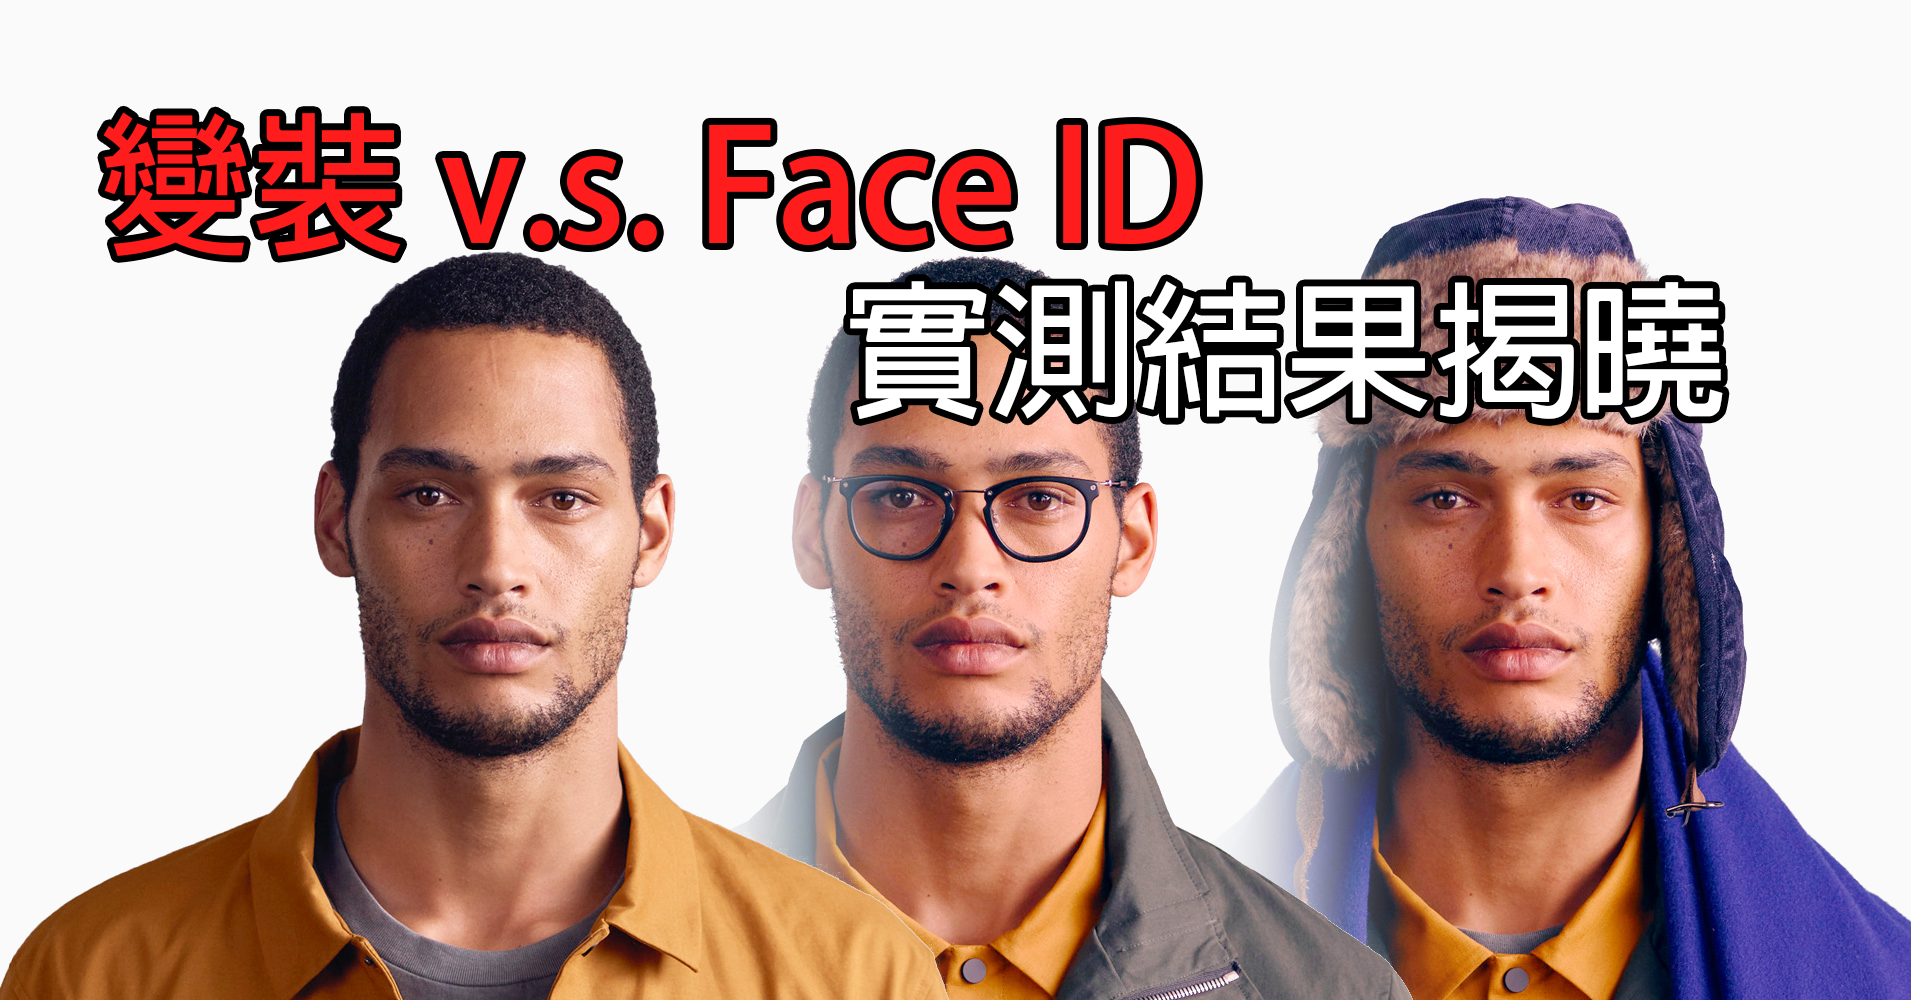 Face ID 1 1